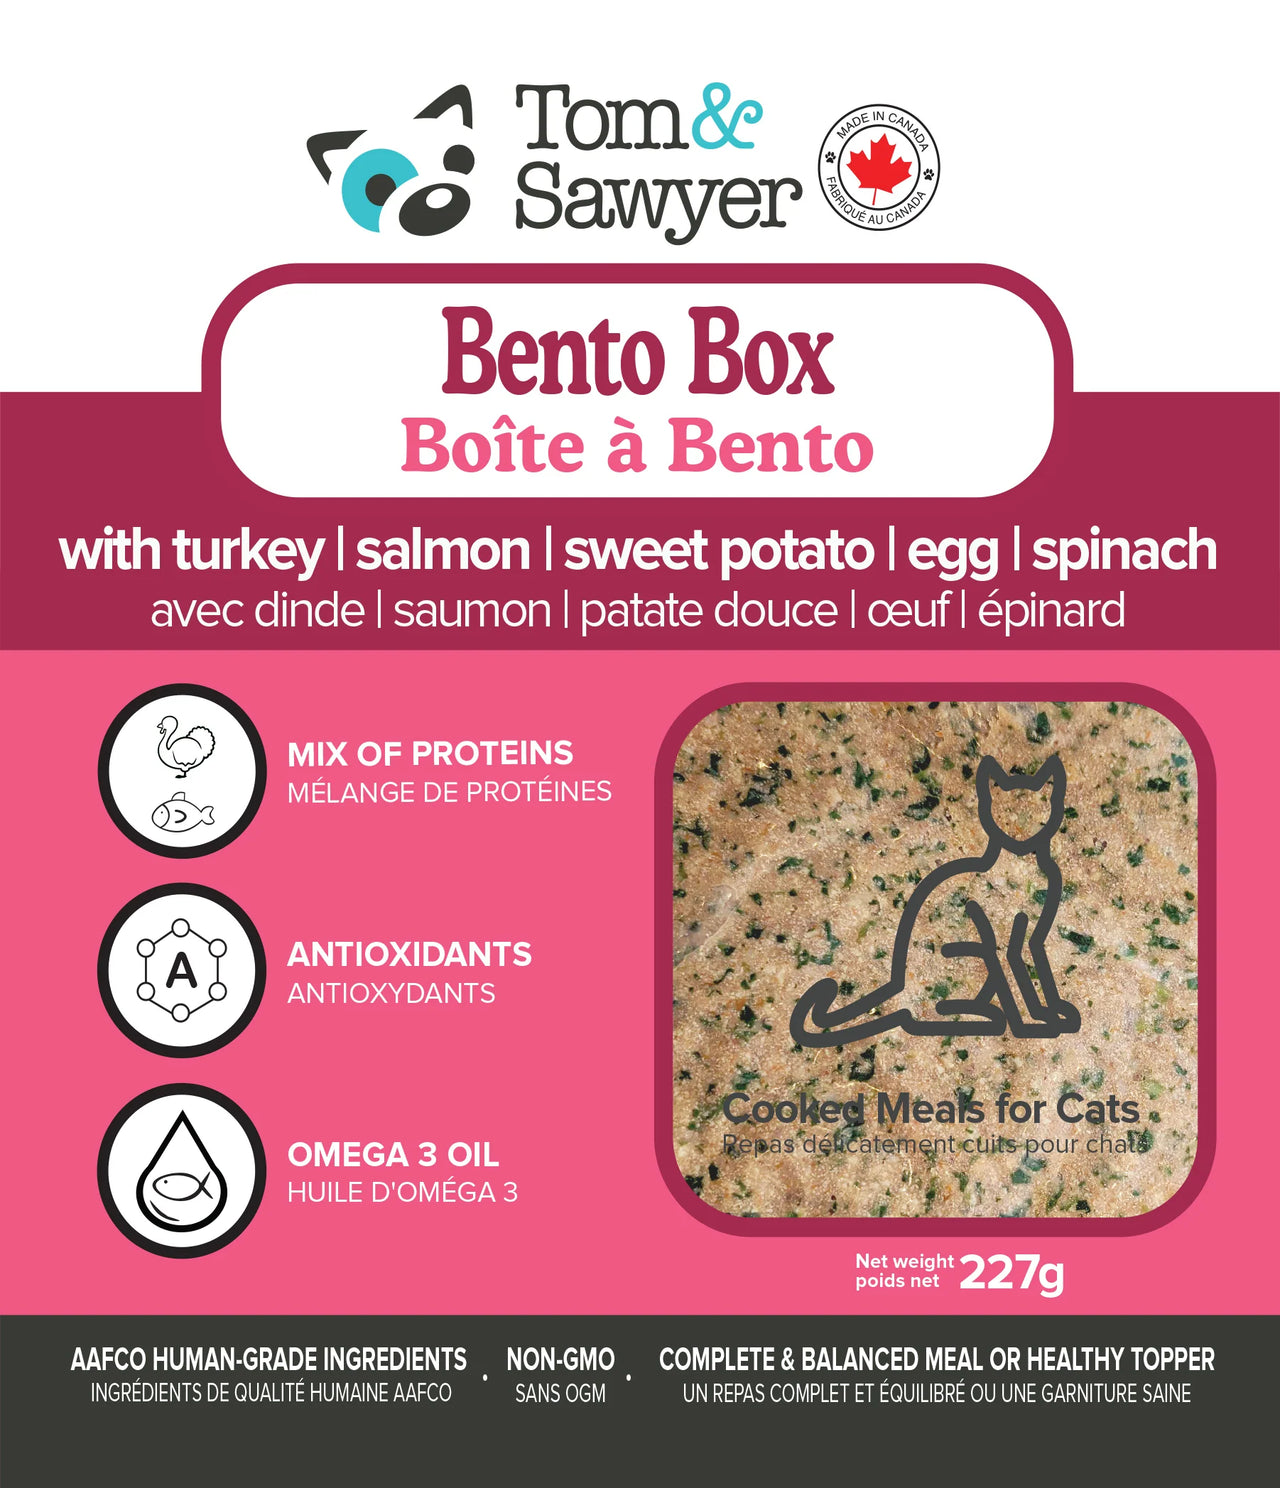 Tom & Sawyer Cat Gently Cooked Bento Box